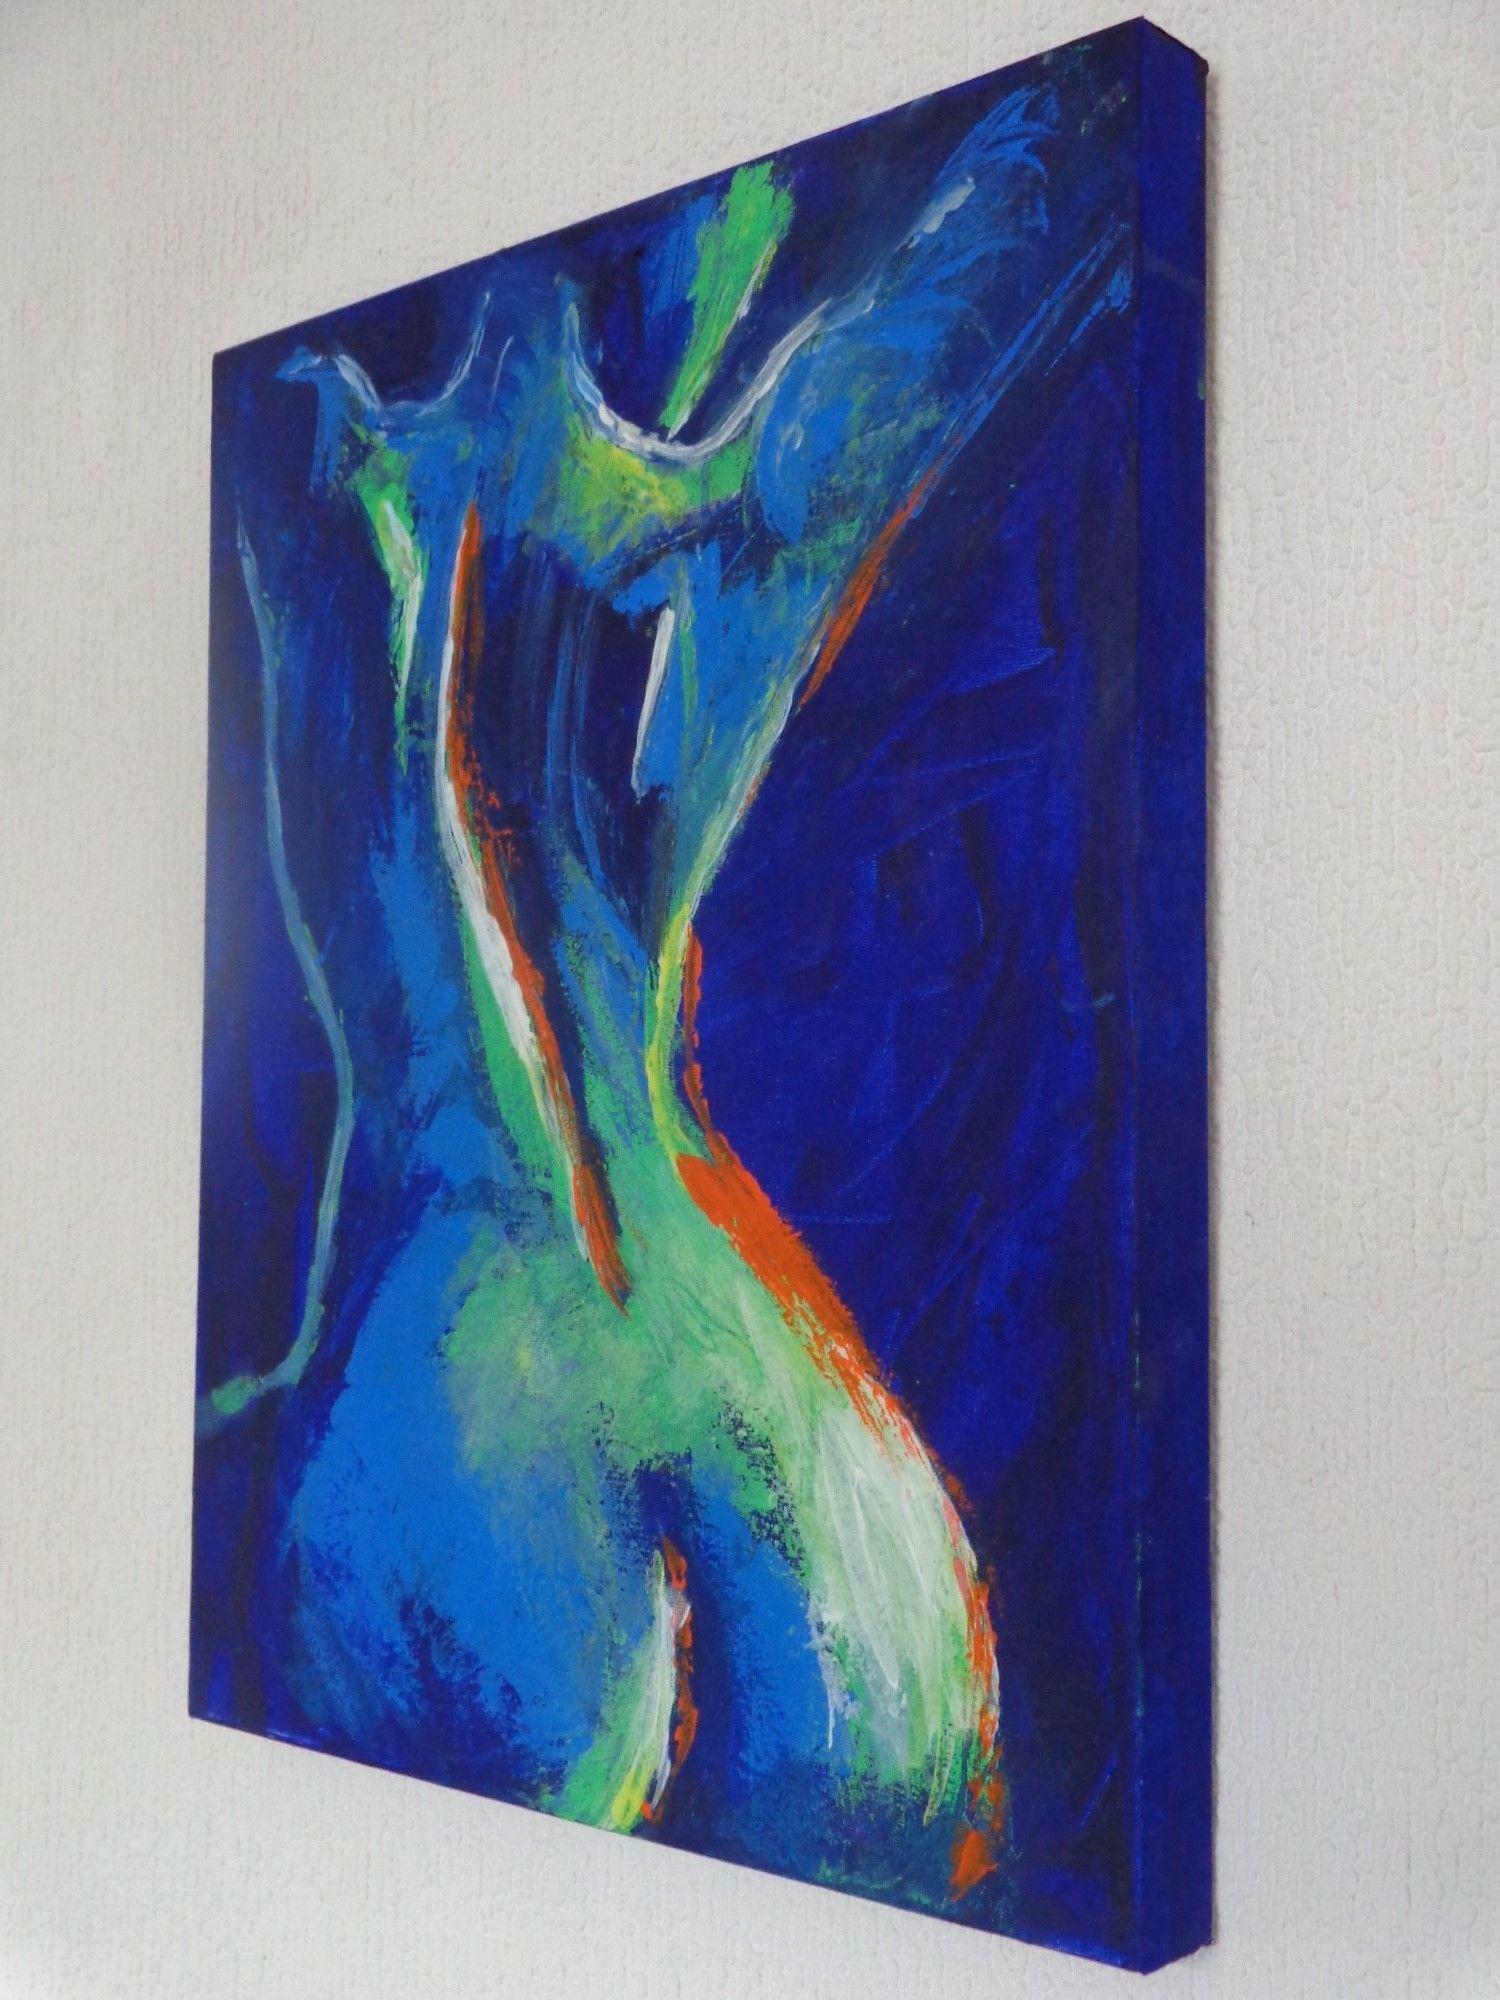 Midnight Lady A - Female Nude, Mixed Media on Canvas - Contemporary Mixed Media Art by Carmen Tyrrell